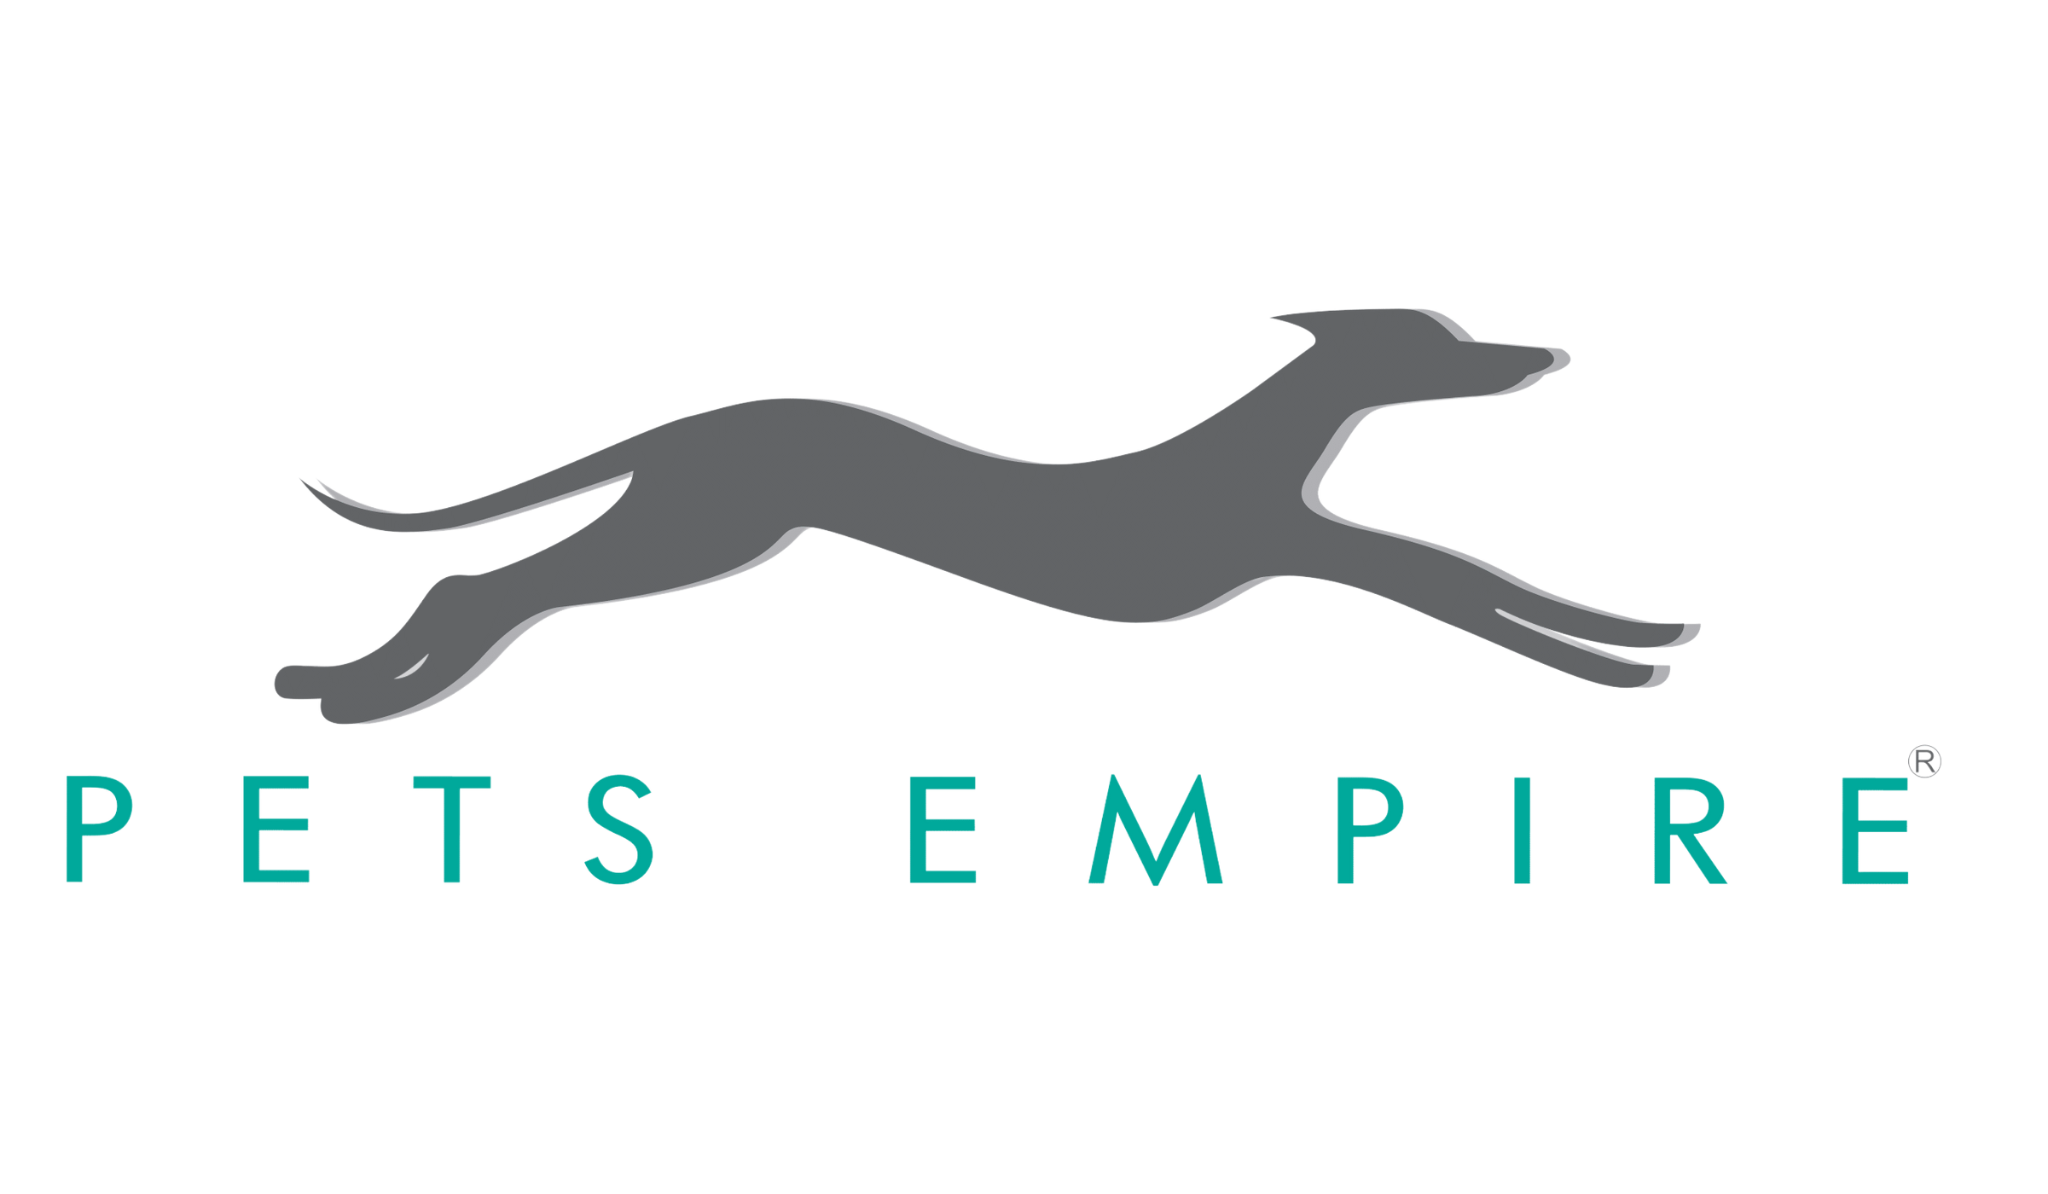 The Pet's Empire 